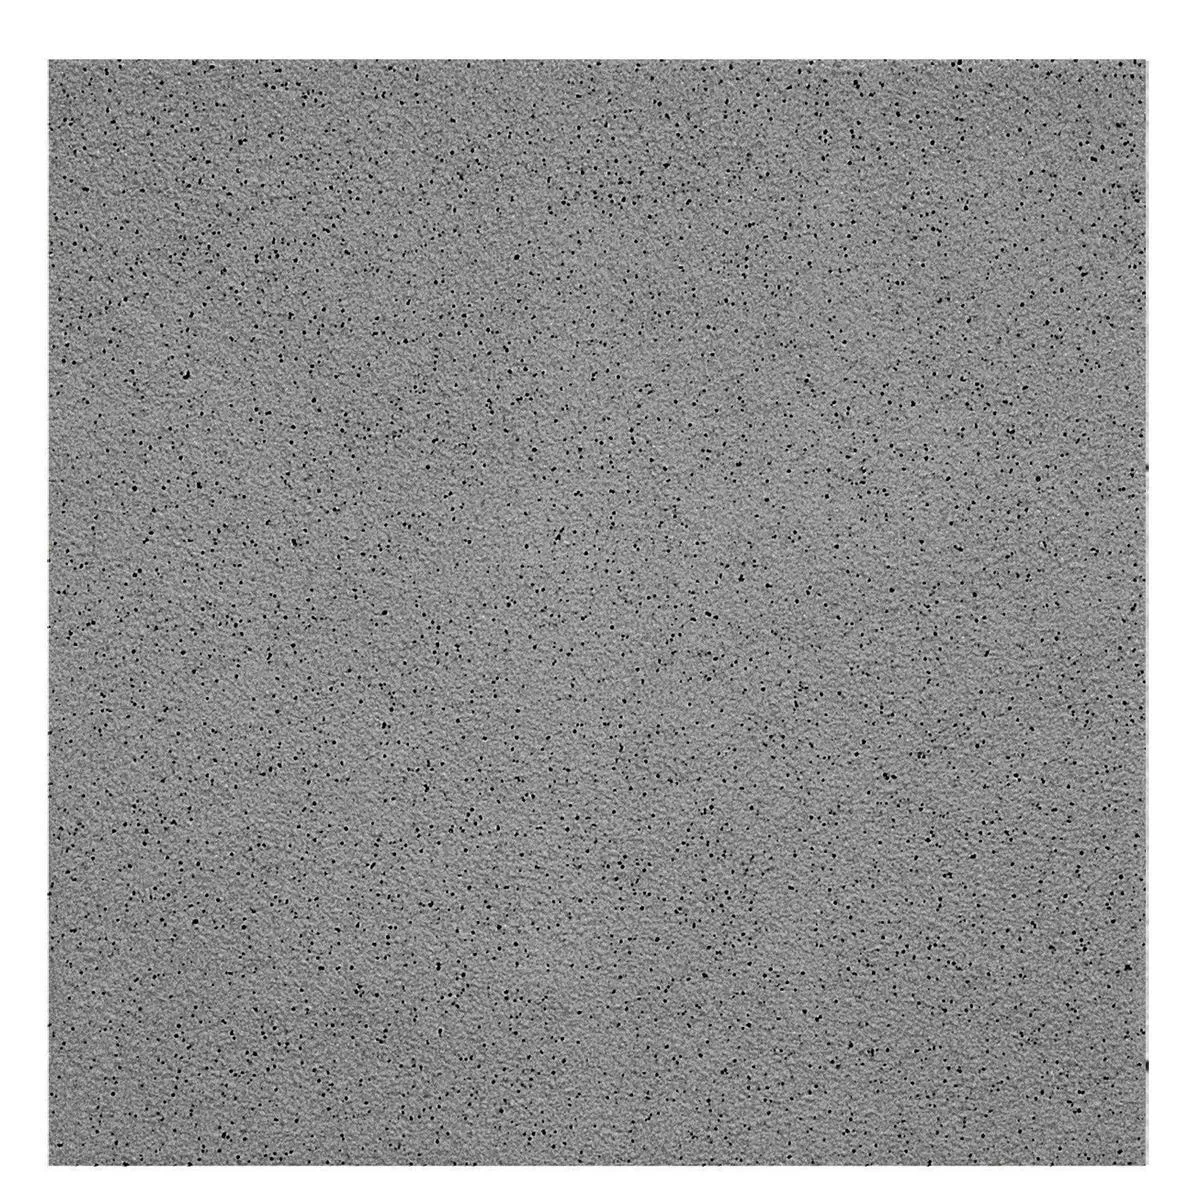 Sample Vloertegels Fijne Korrel R10/A Antraciet 15x15cm